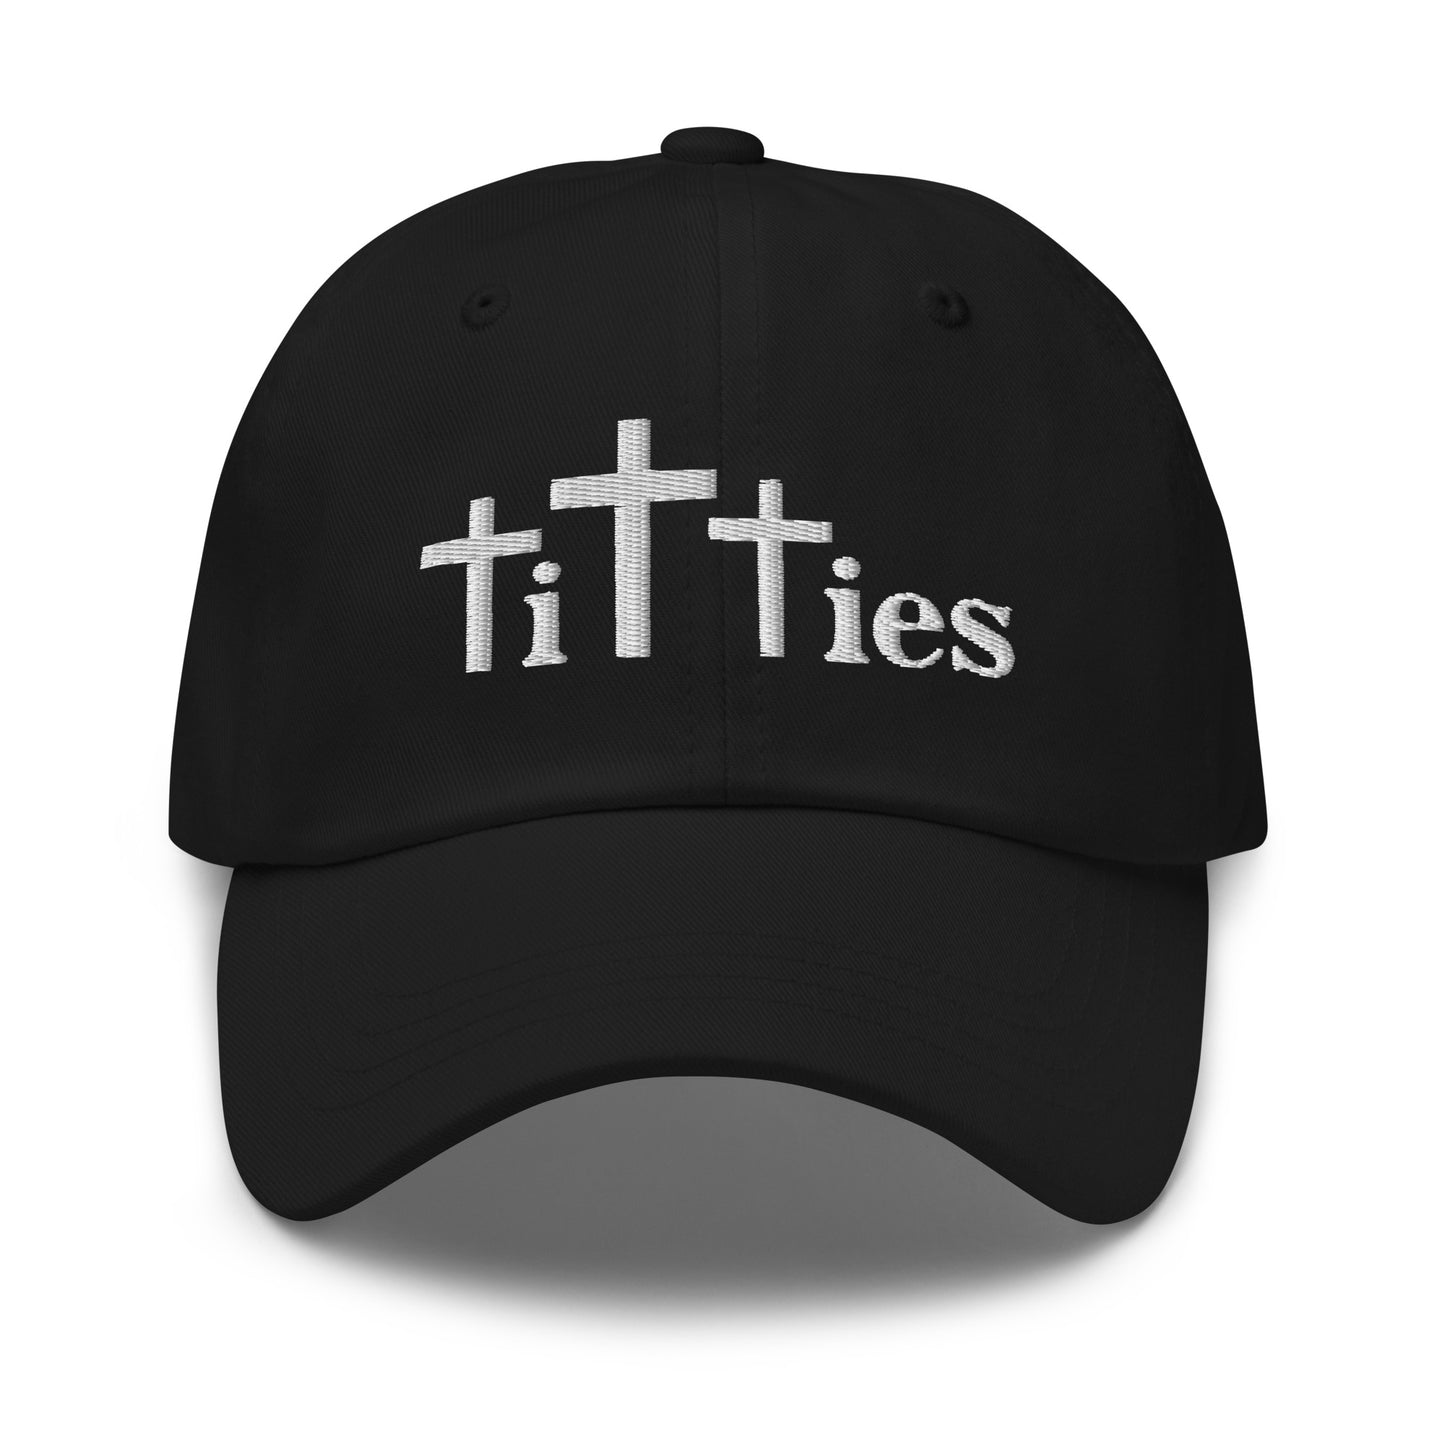 Titties (Crosses) hat